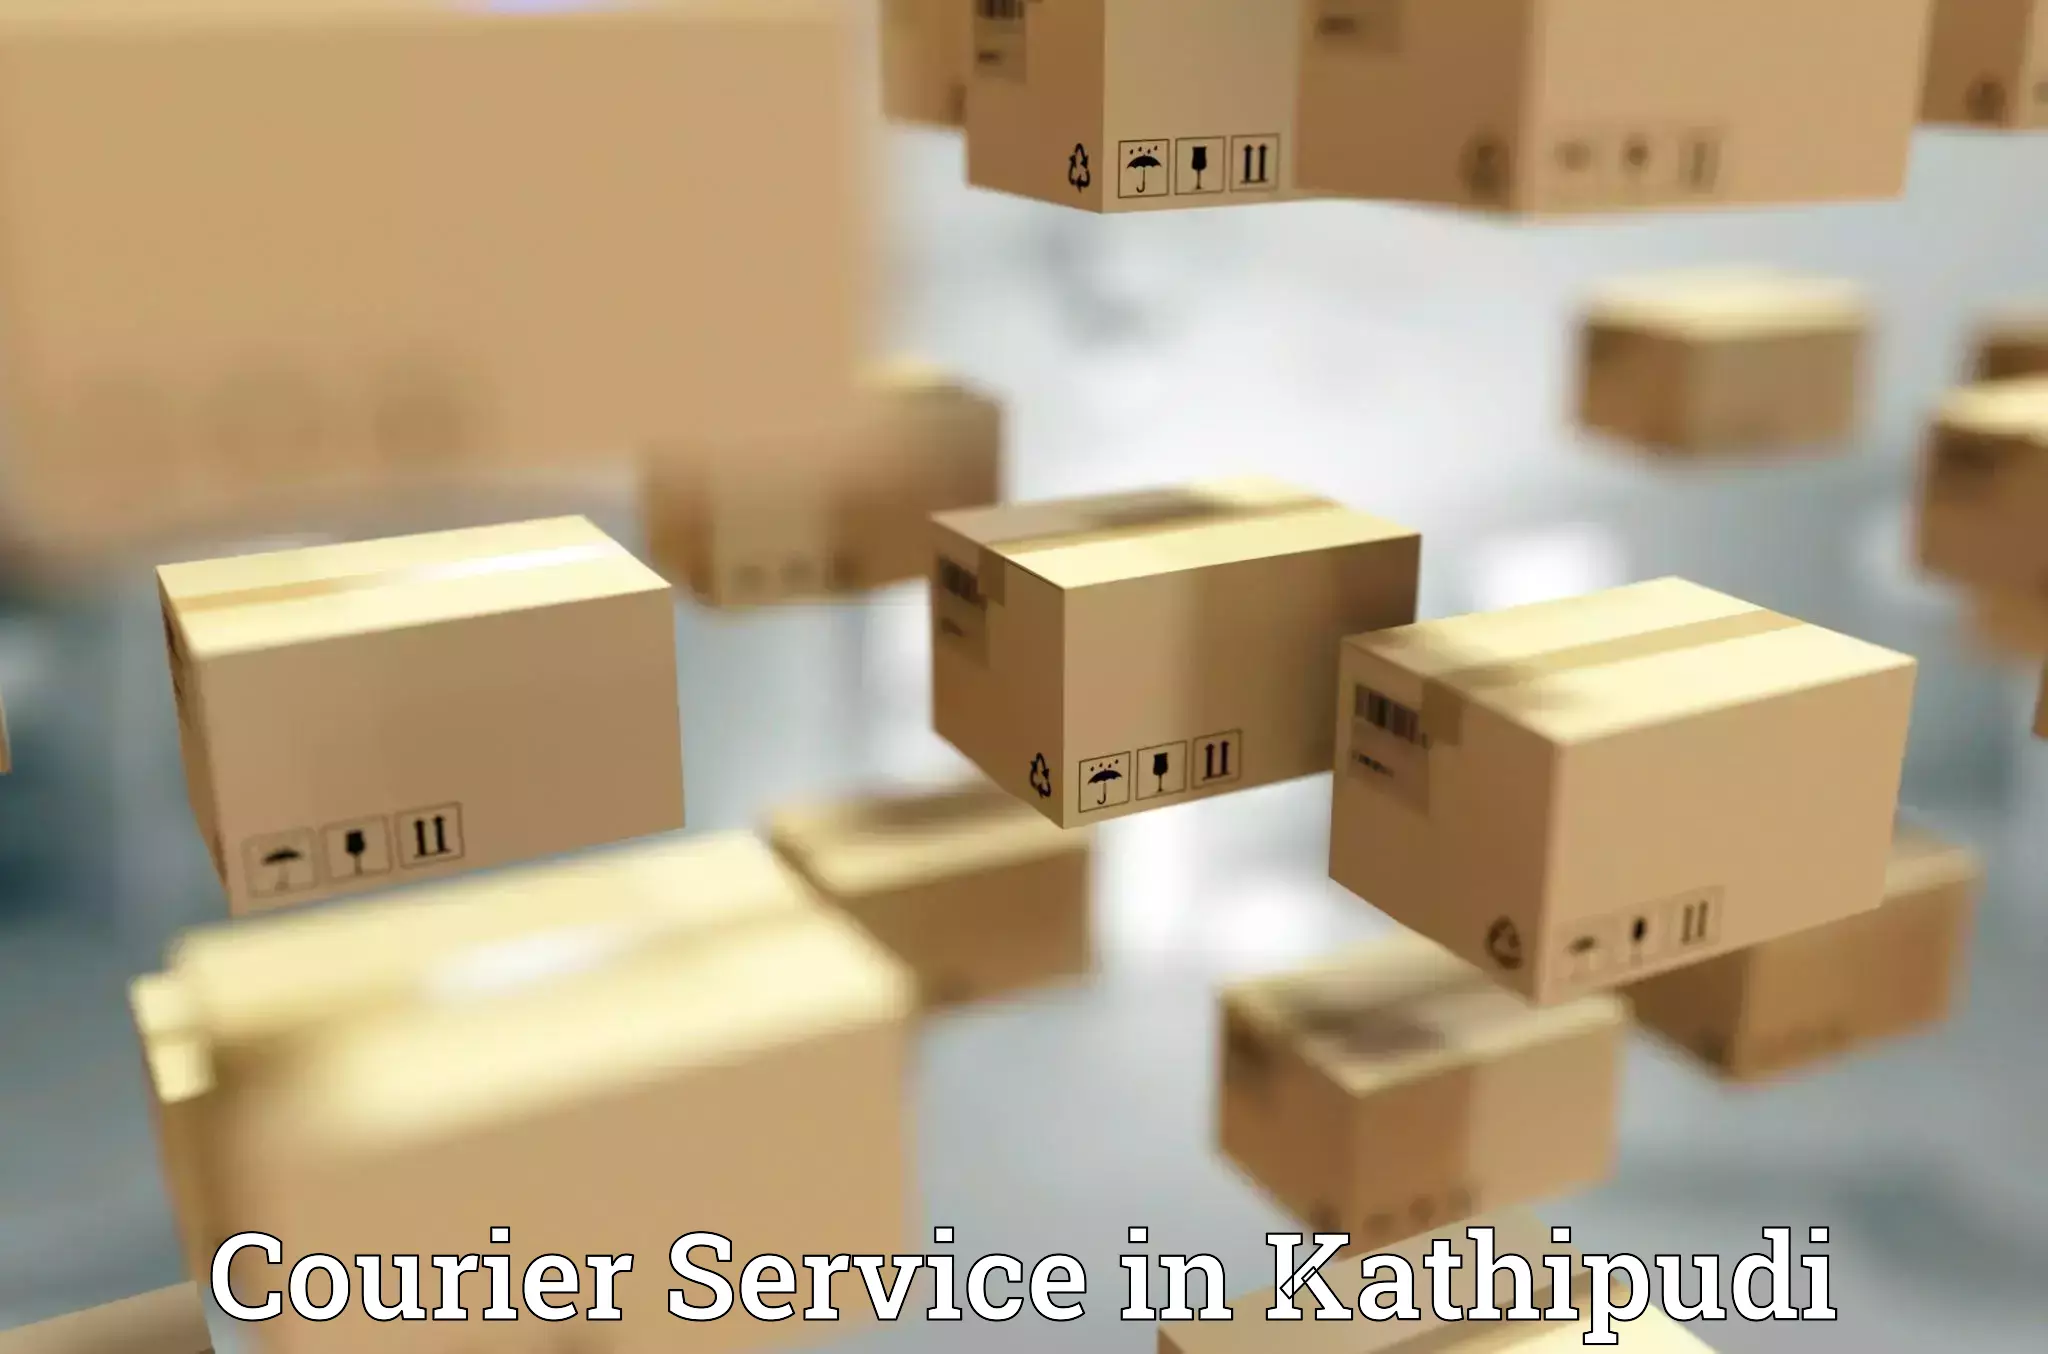 Cargo delivery service in Kathipudi